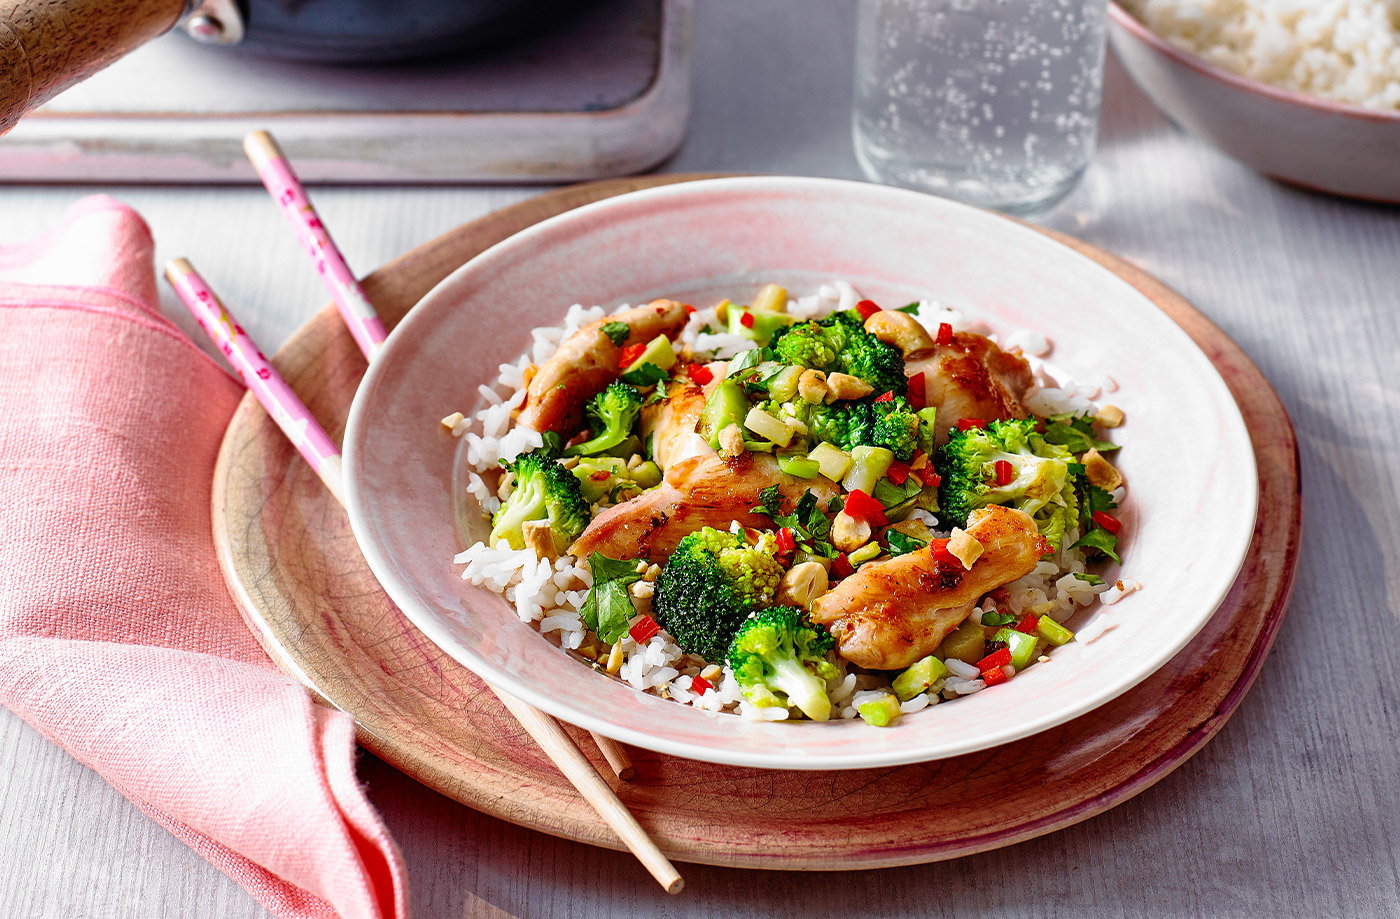 Chicken and broccoli stir-fry Recipe